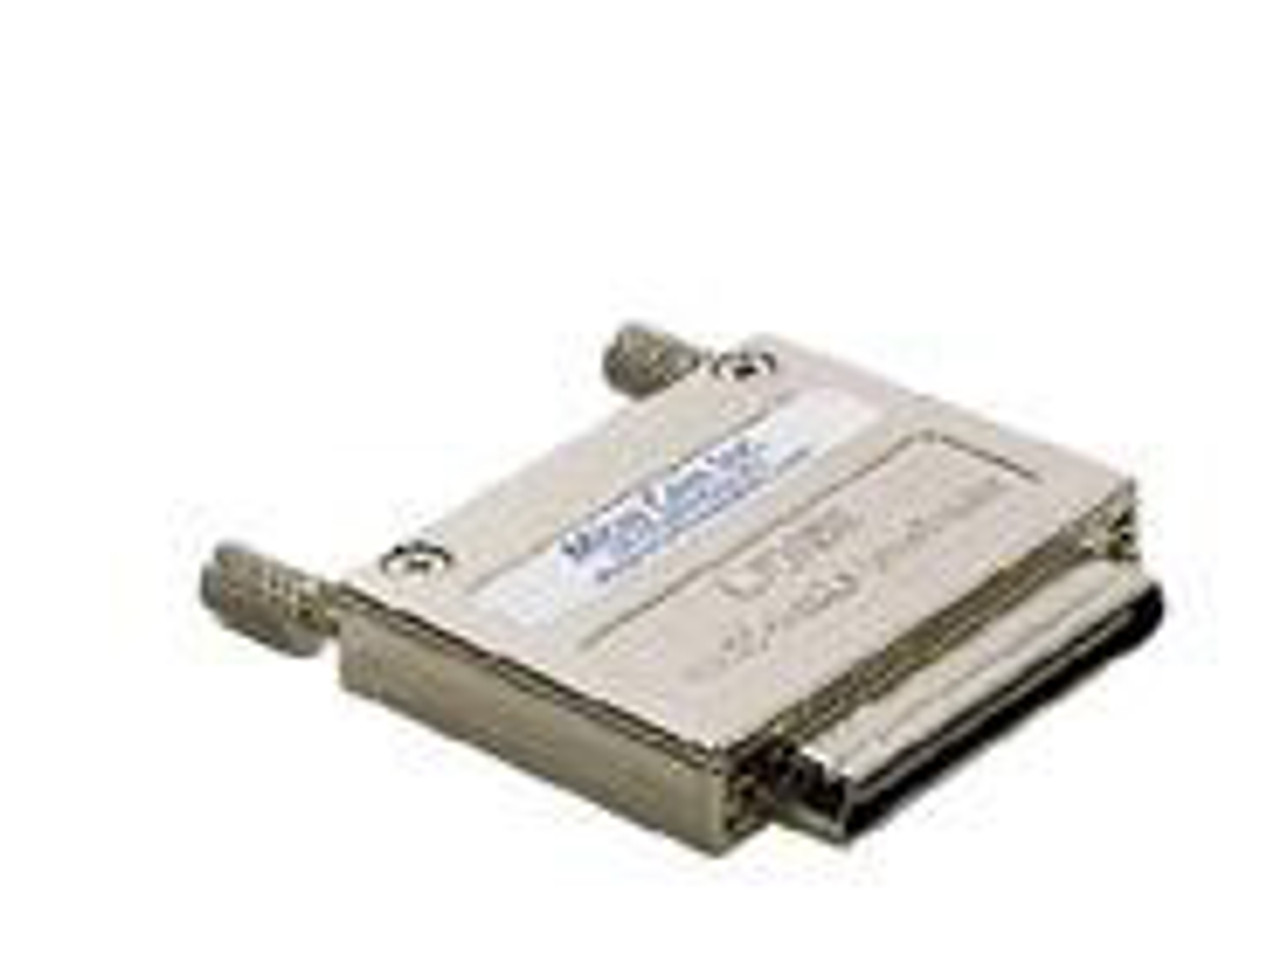 SPS-TERMINATOR;VHDC;SCSI - 412474-001